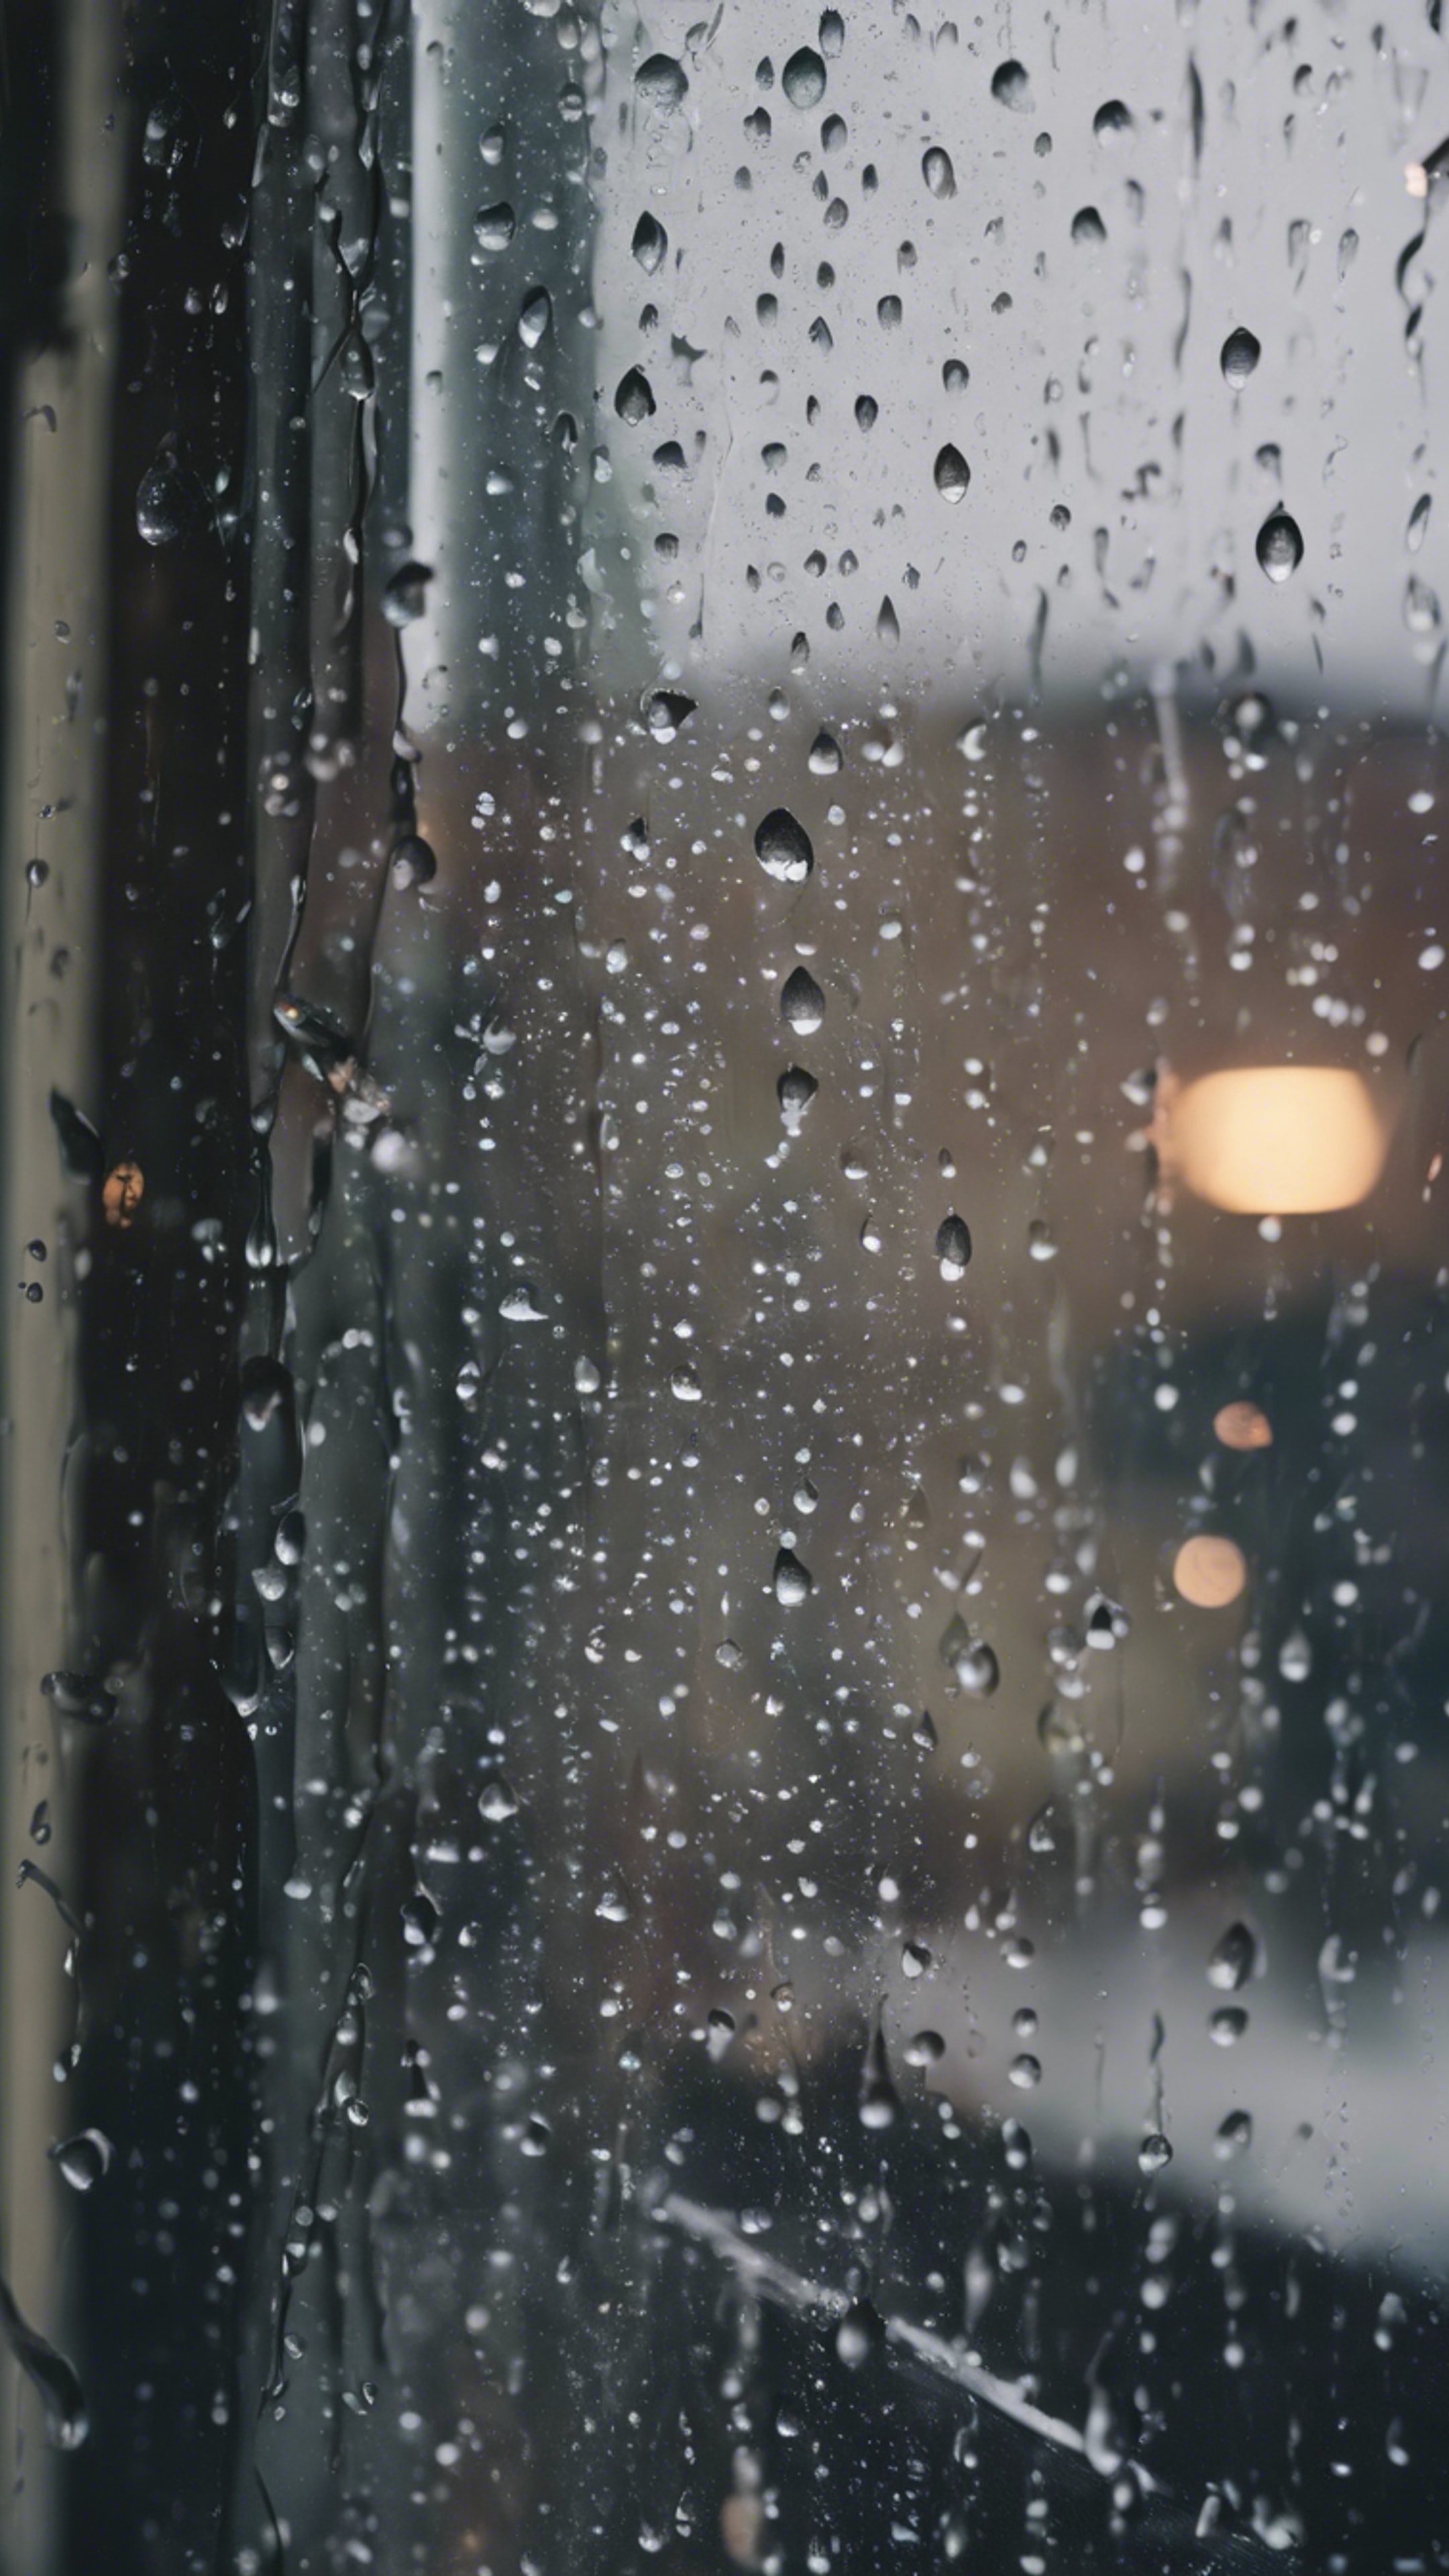 A heavy rainstorm viewed through a window, the droplets streaking down the glass Wallpaper[548369da7c5b4ee9bdb0]